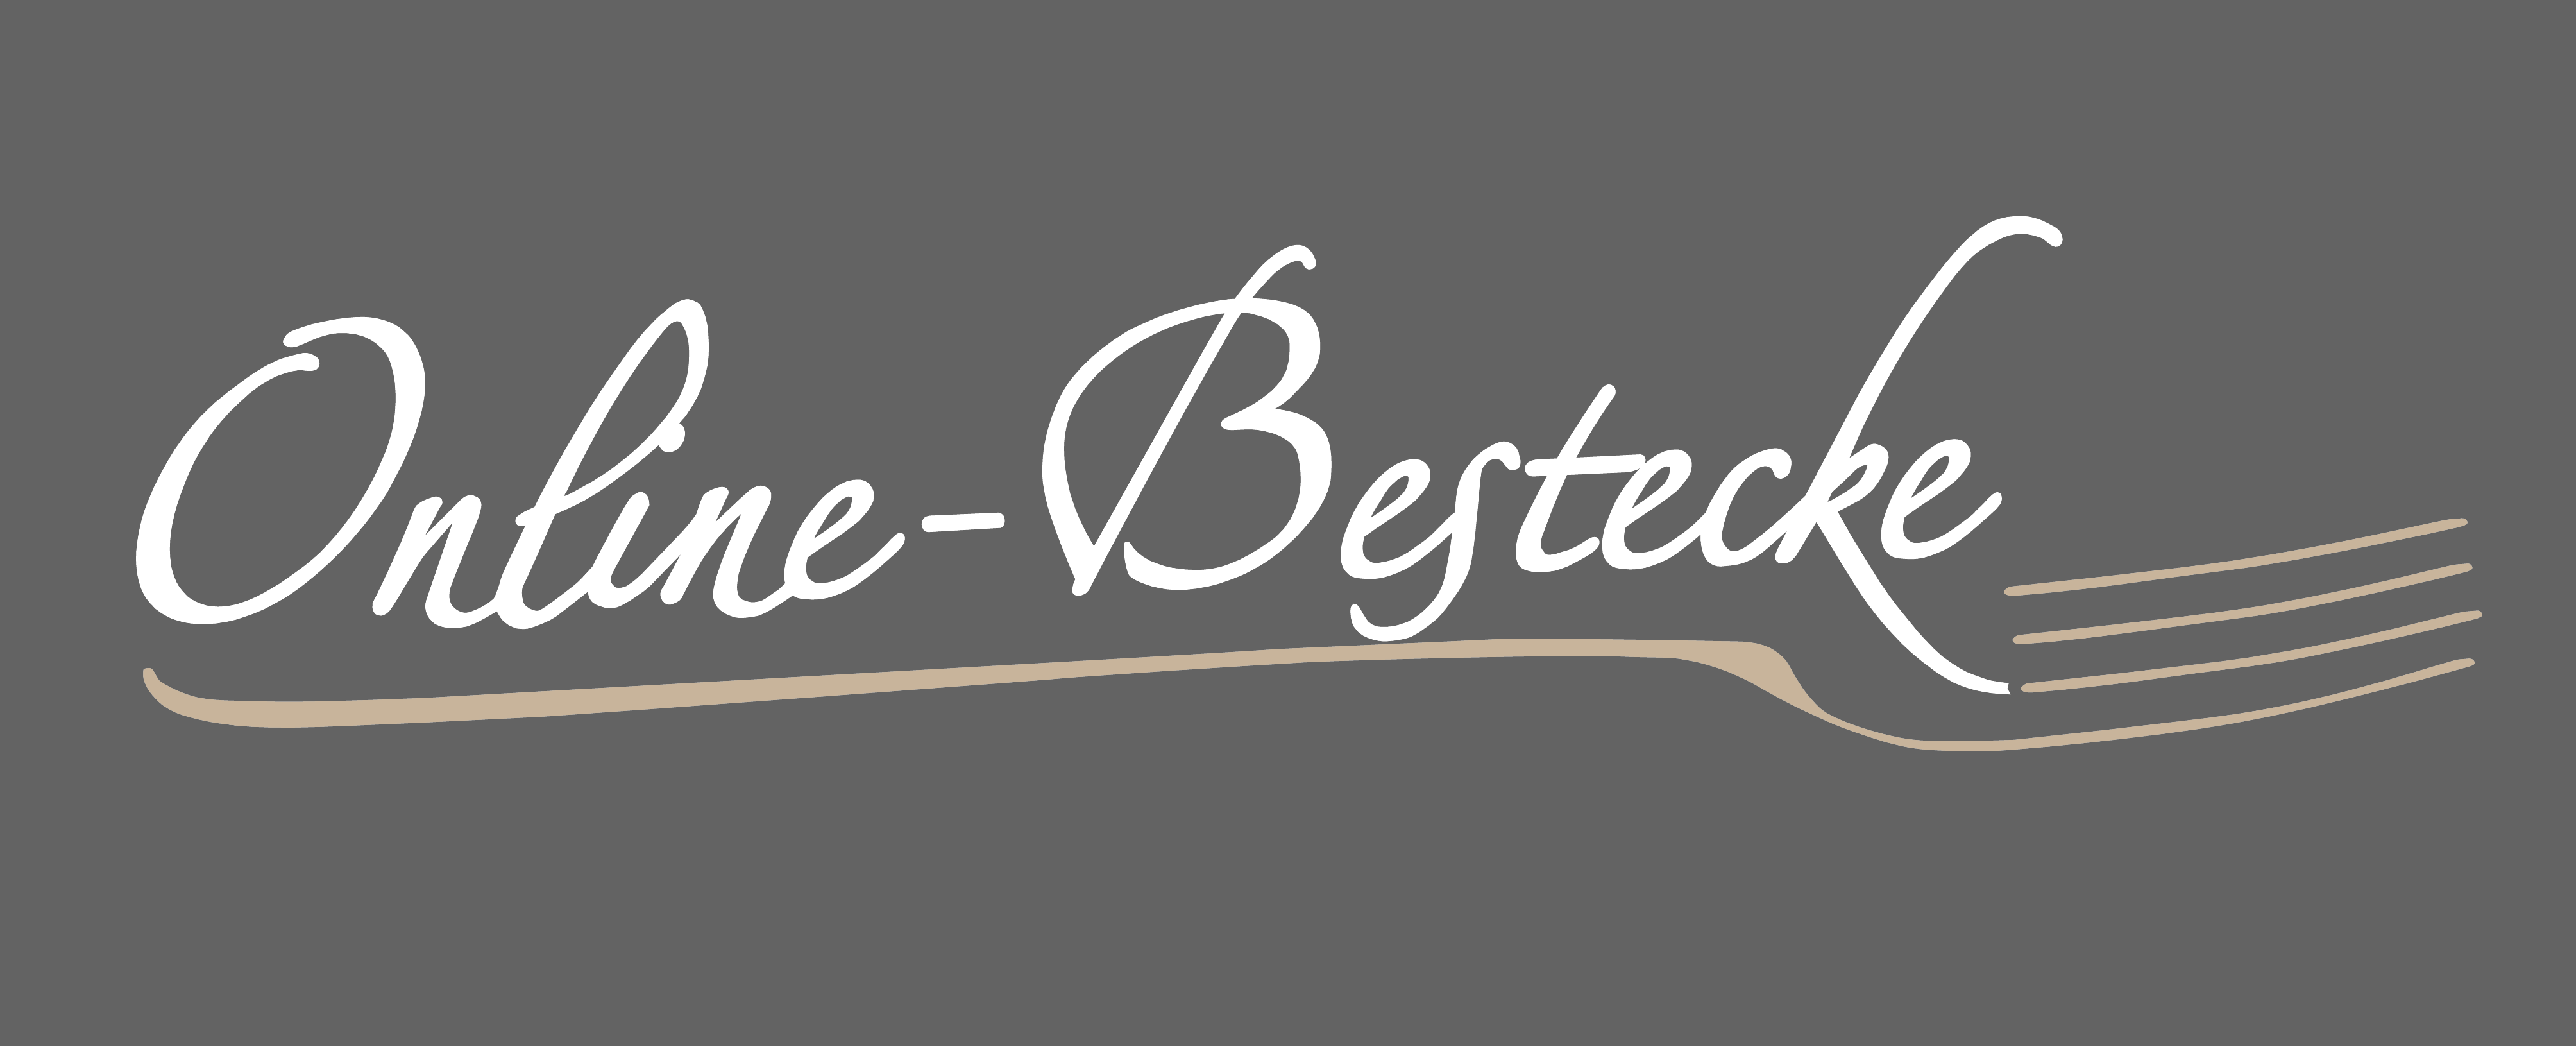 Online-Bestecke-Logo